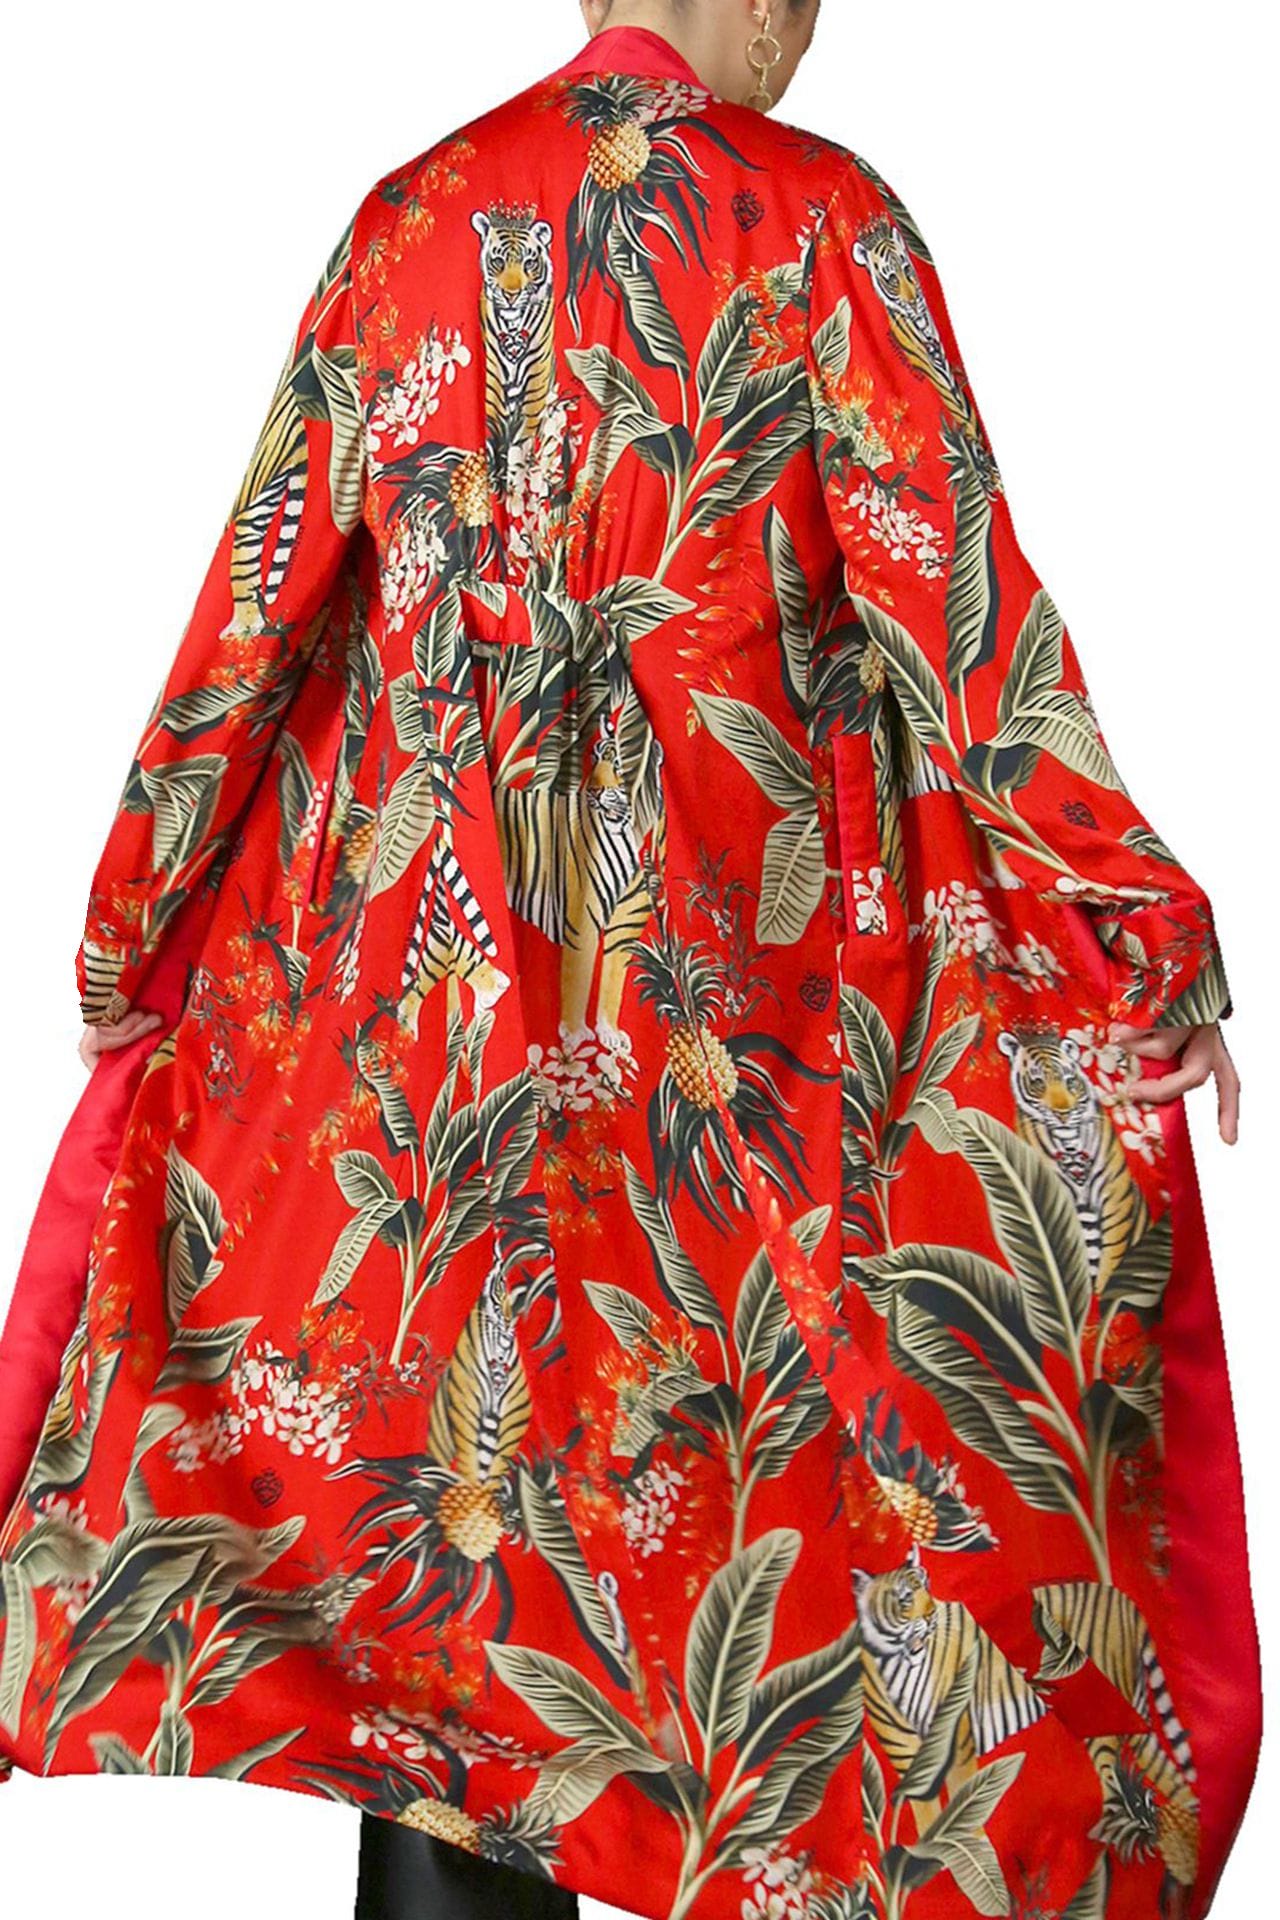 "Kyle X Shahida" "silk kimono womens" "animal print robe" "robe silk kimono" "belted kimono"